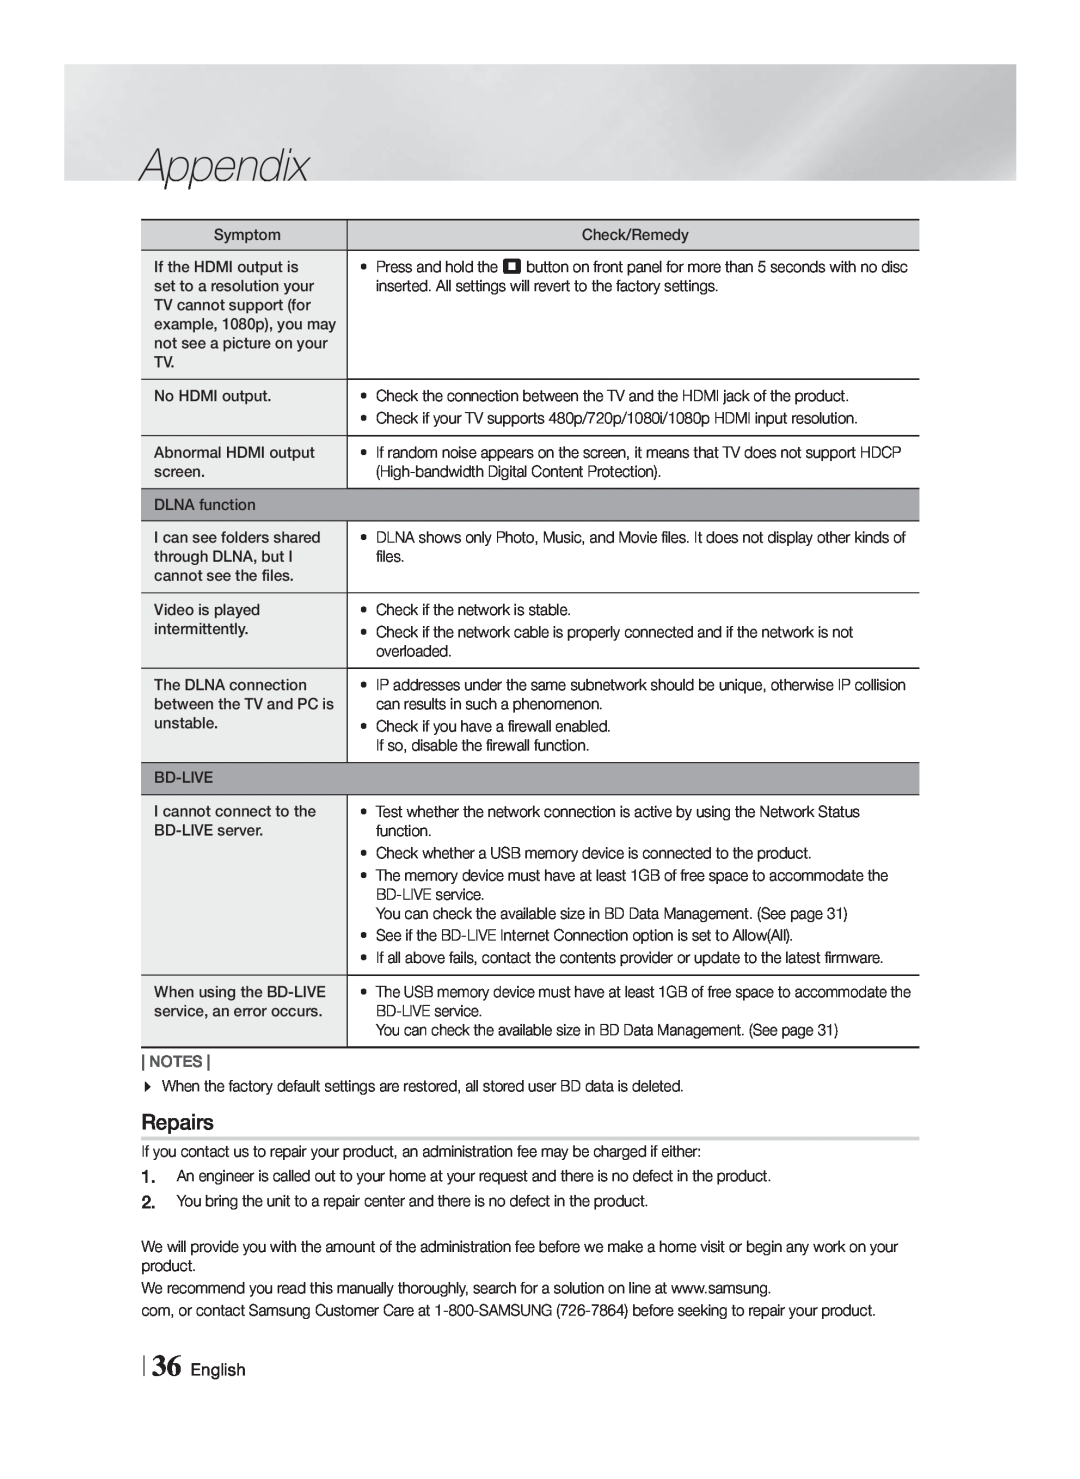 Samsung HTF4500ZA user manual Repairs, Appendix, English 